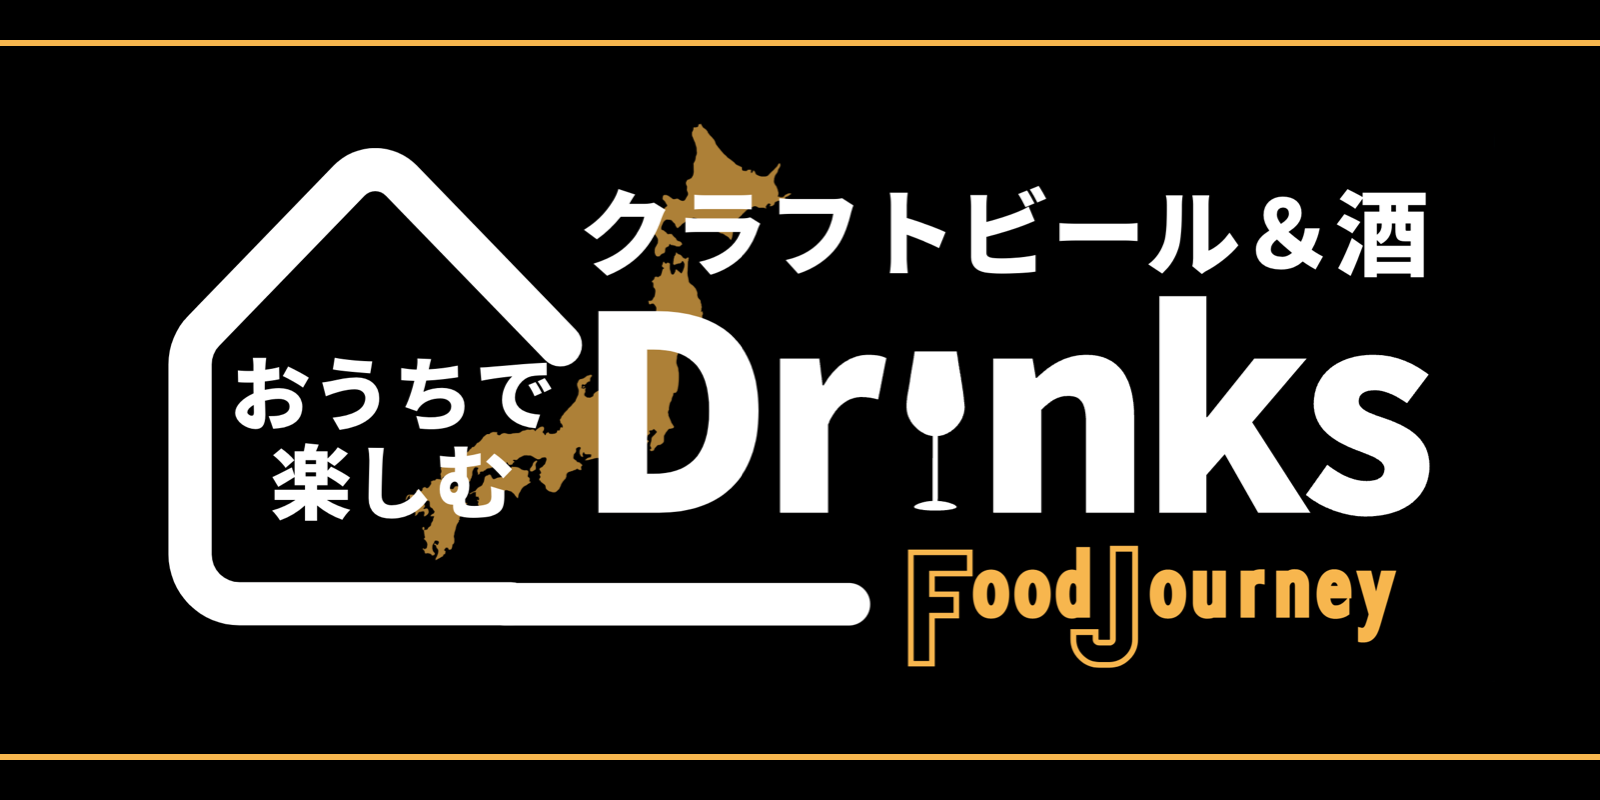 Drink Food Journey